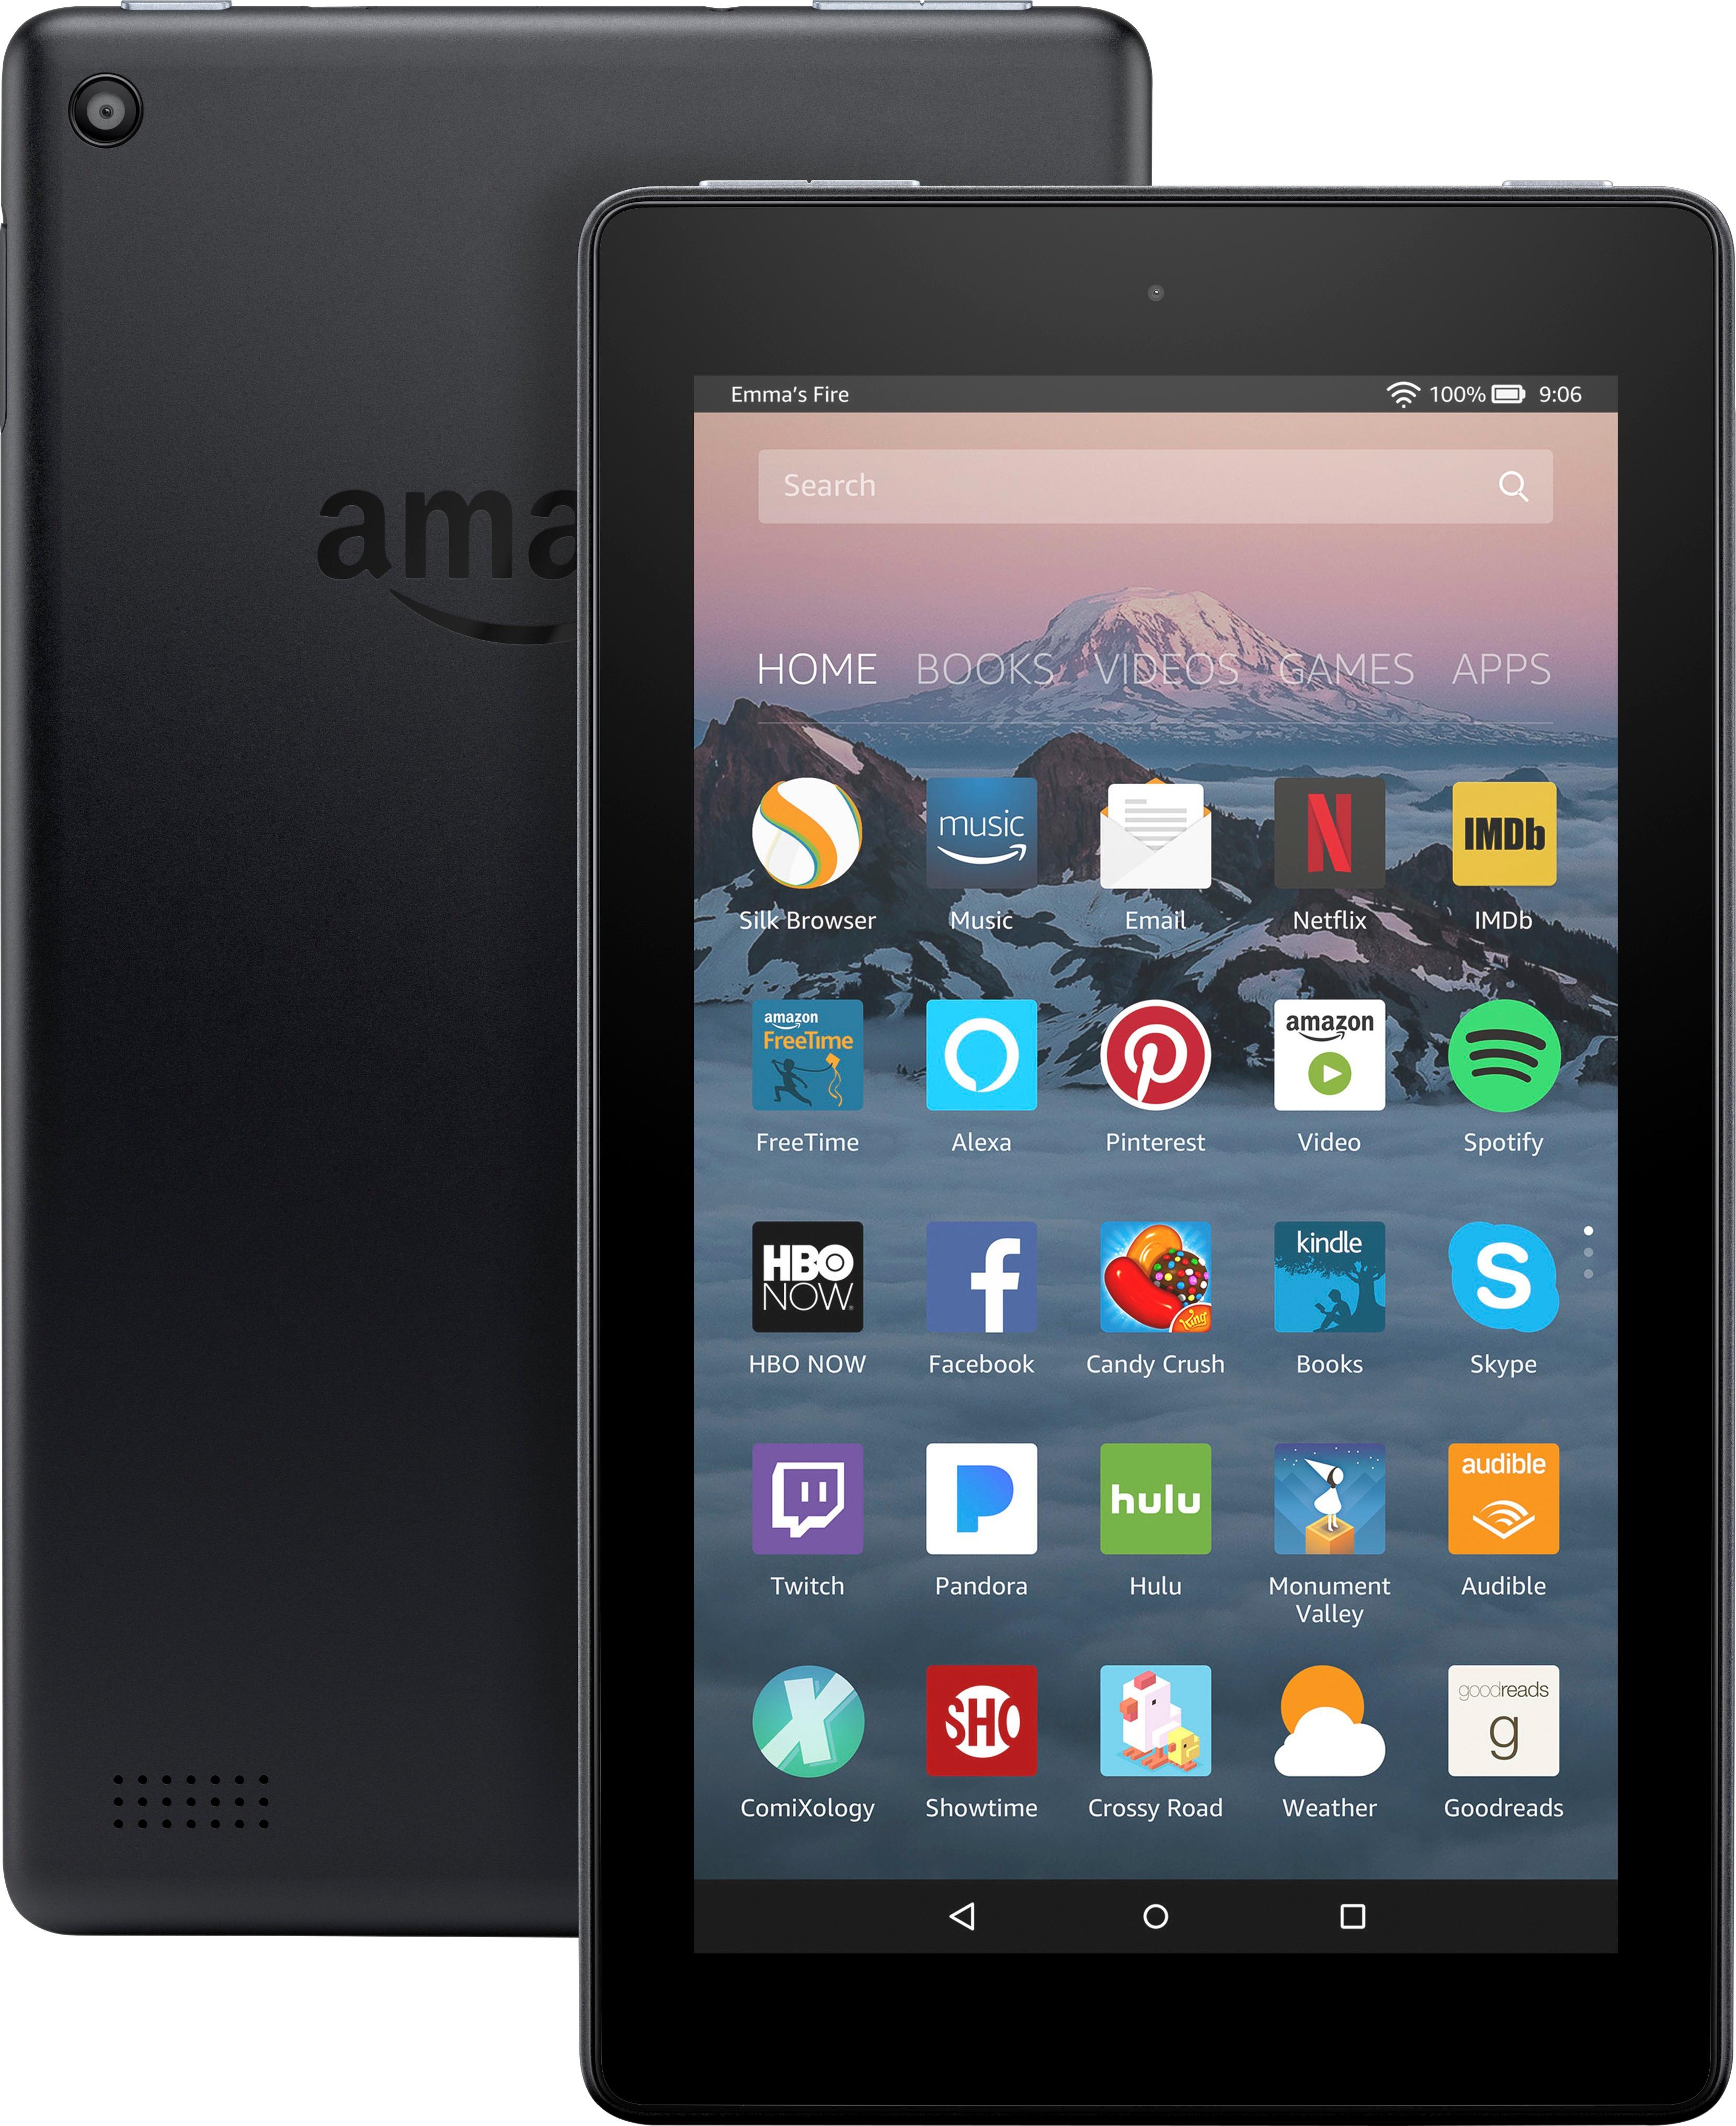 Best Buy Amazon Fire 7 Tablet 8gb 7th Generation 2017 Release